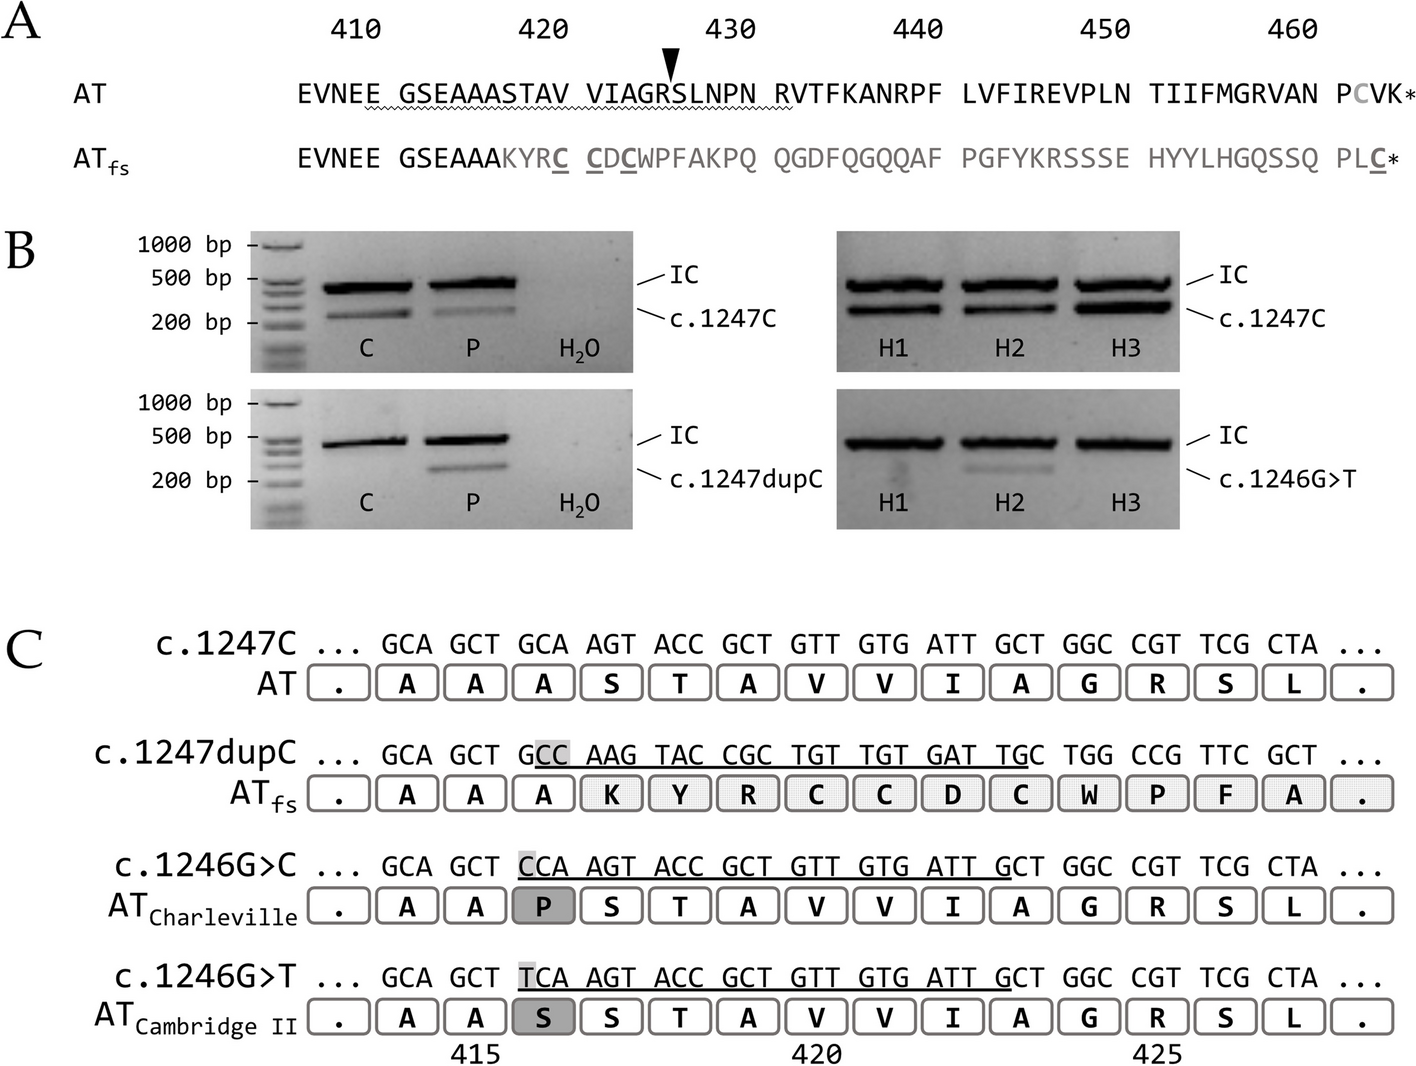 SERPINC1 c.1247dupC: a novel SERPINC1 gene mutation associated with familial thrombosis results in a secretion defect and quantitative antithrombin deficiency